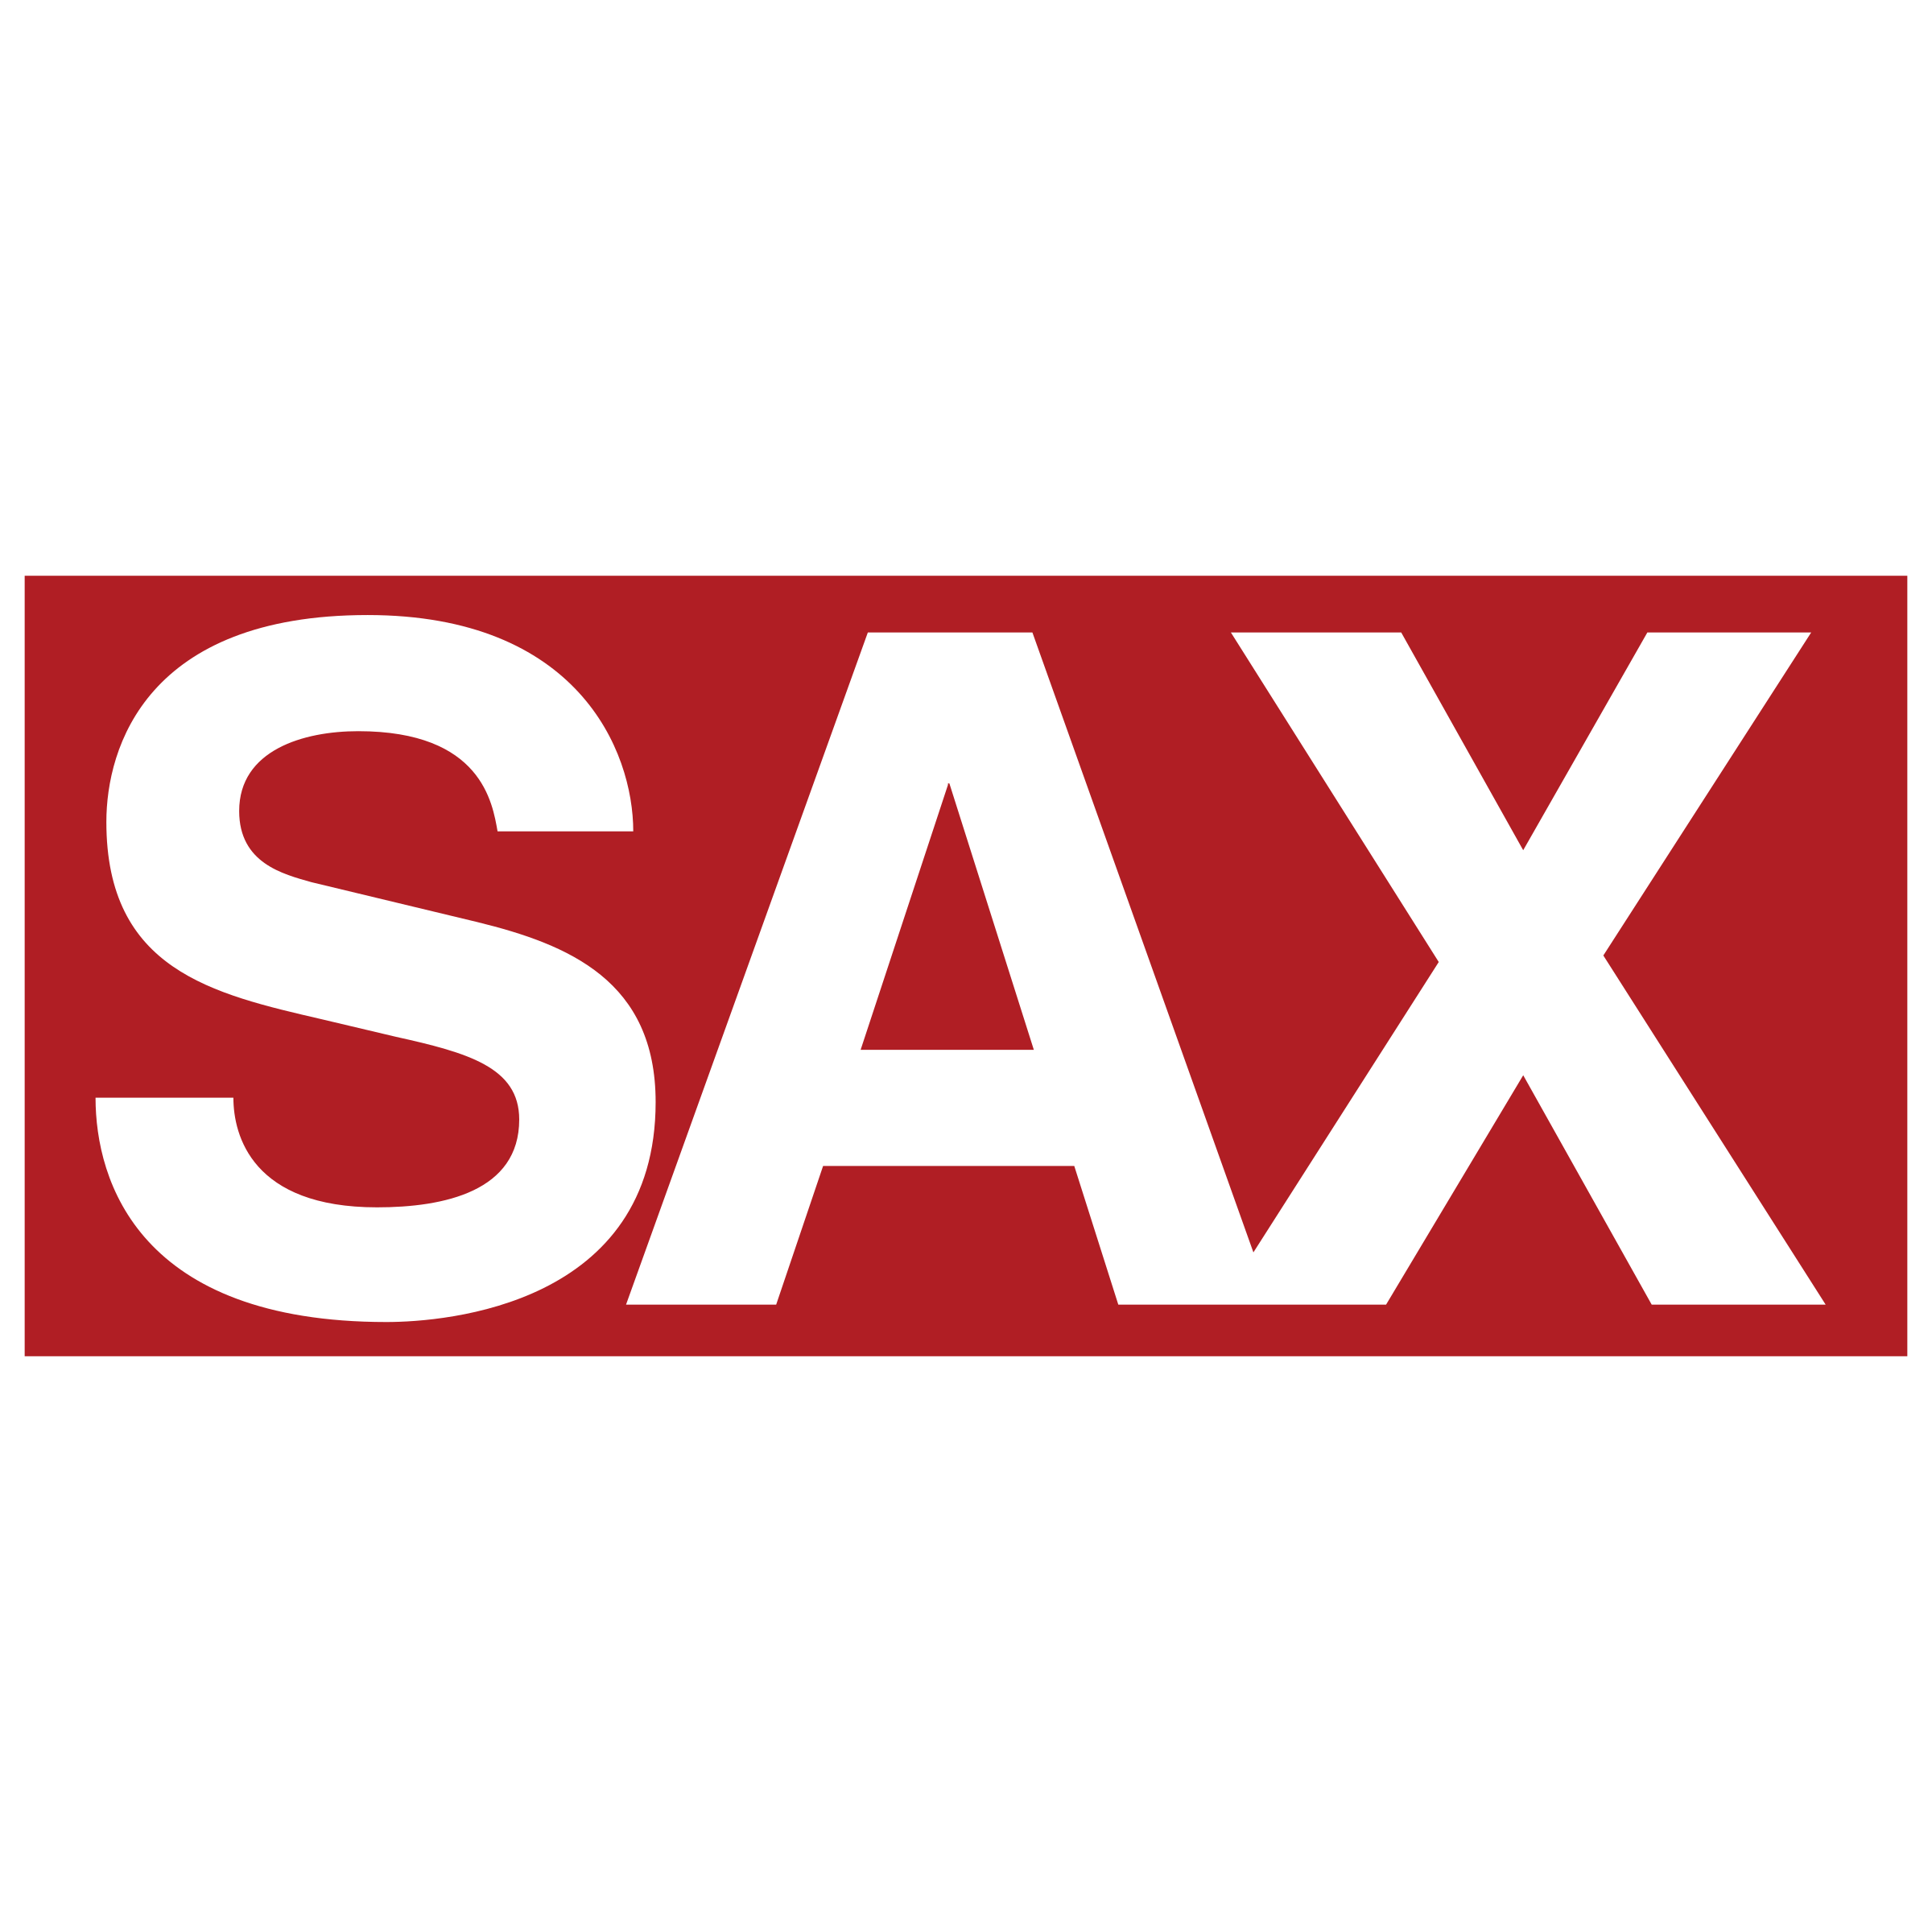 Sax Logo - Sax Logo PNG Transparent & SVG Vector - Freebie Supply